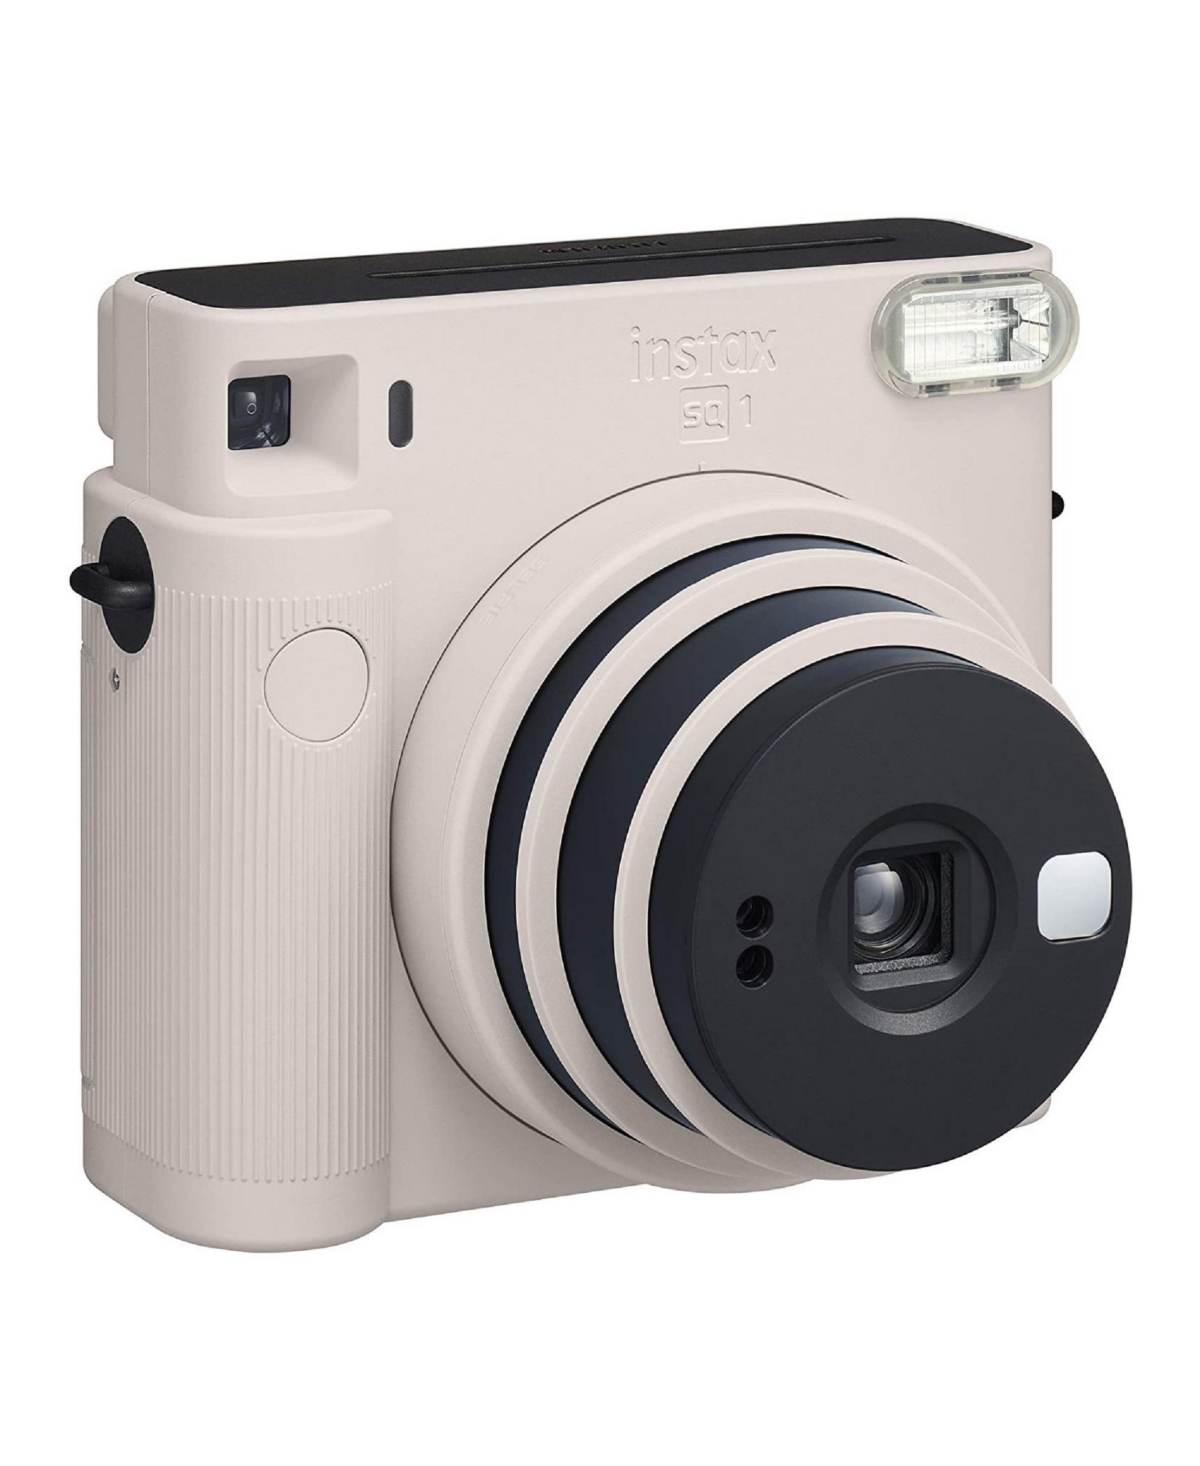 Fujifilm Instax Square Sq1 Instant Camera (white) Bundle With Film Bundle In Neutral